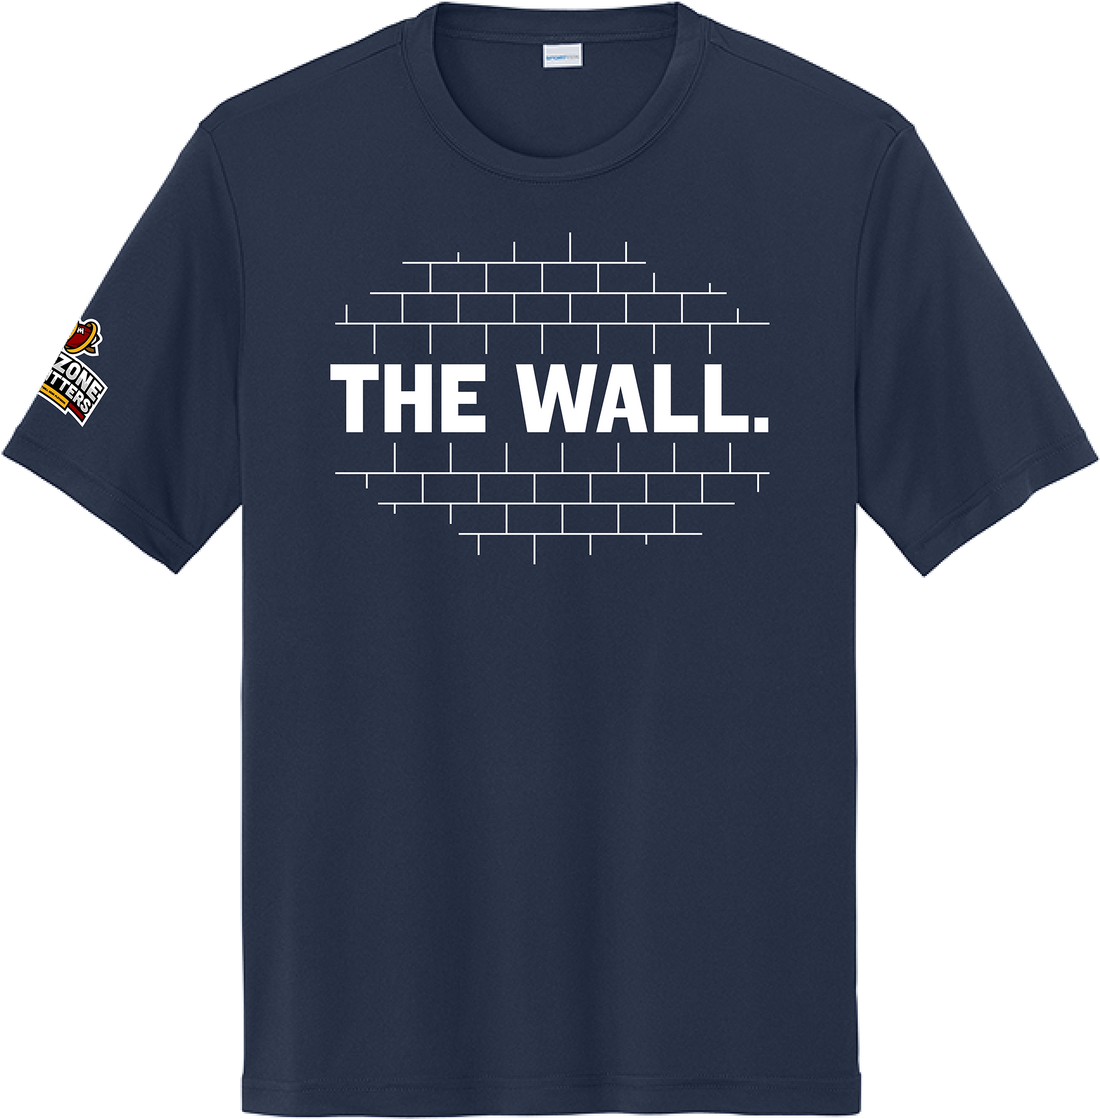 The Brick Wall - Youth Short Sleeve Shirt